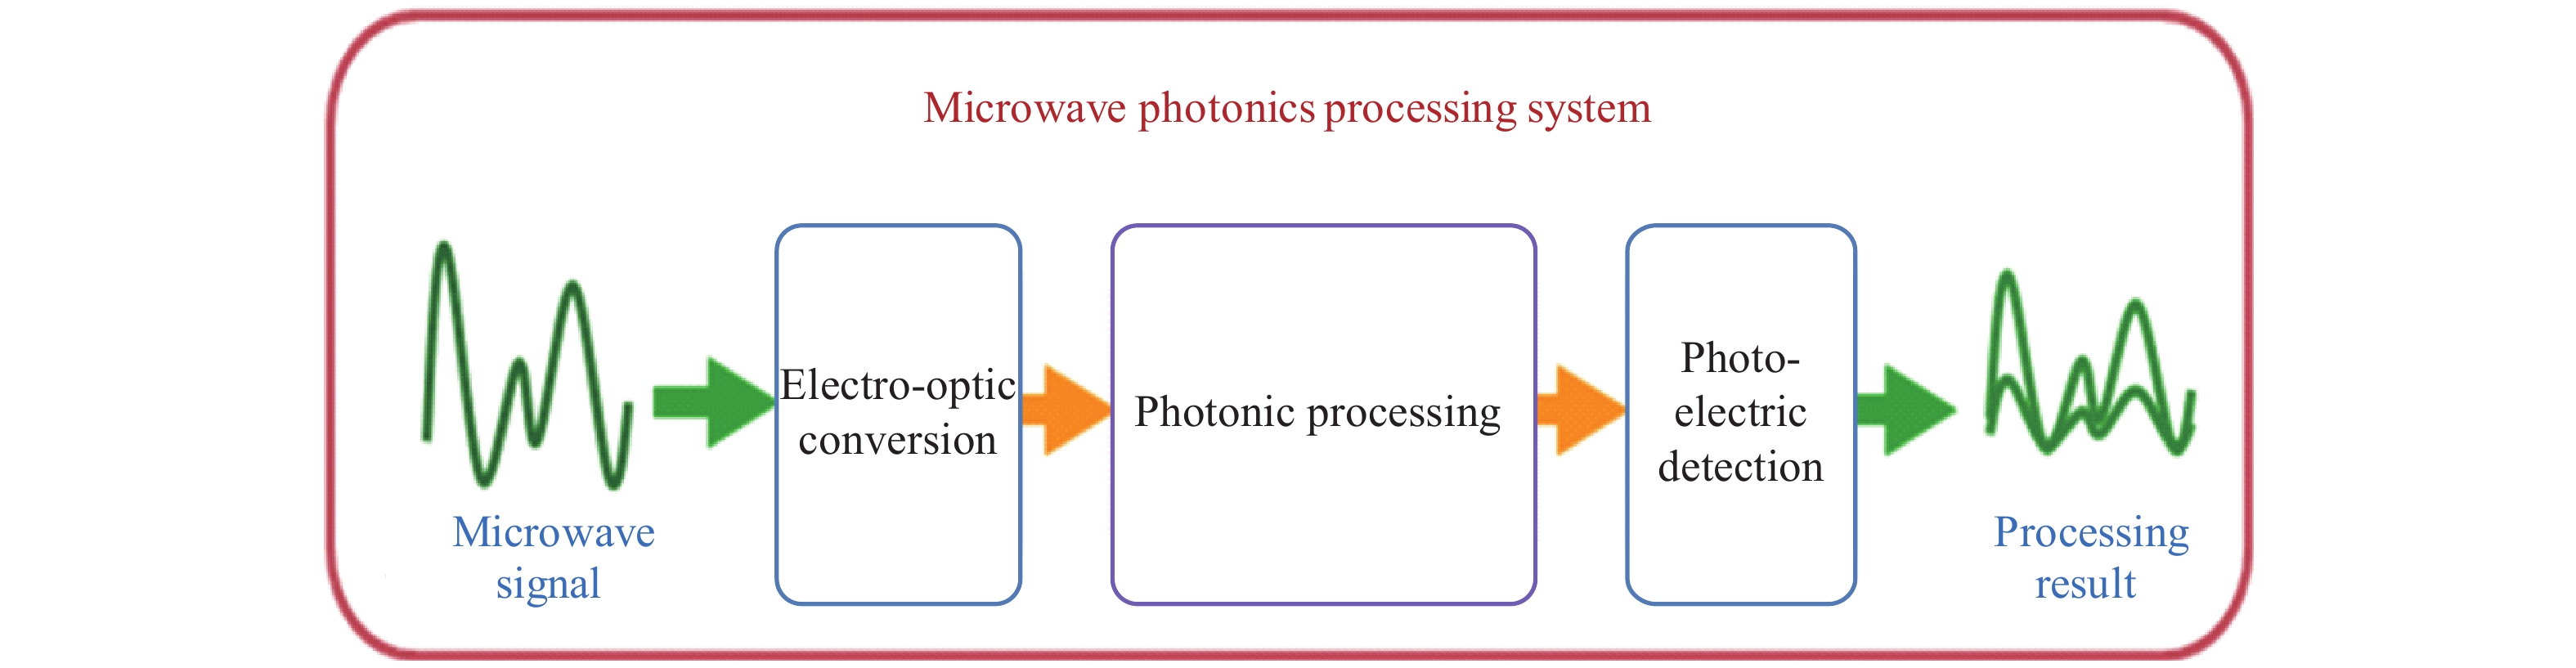 Principle of microwave photonics processing